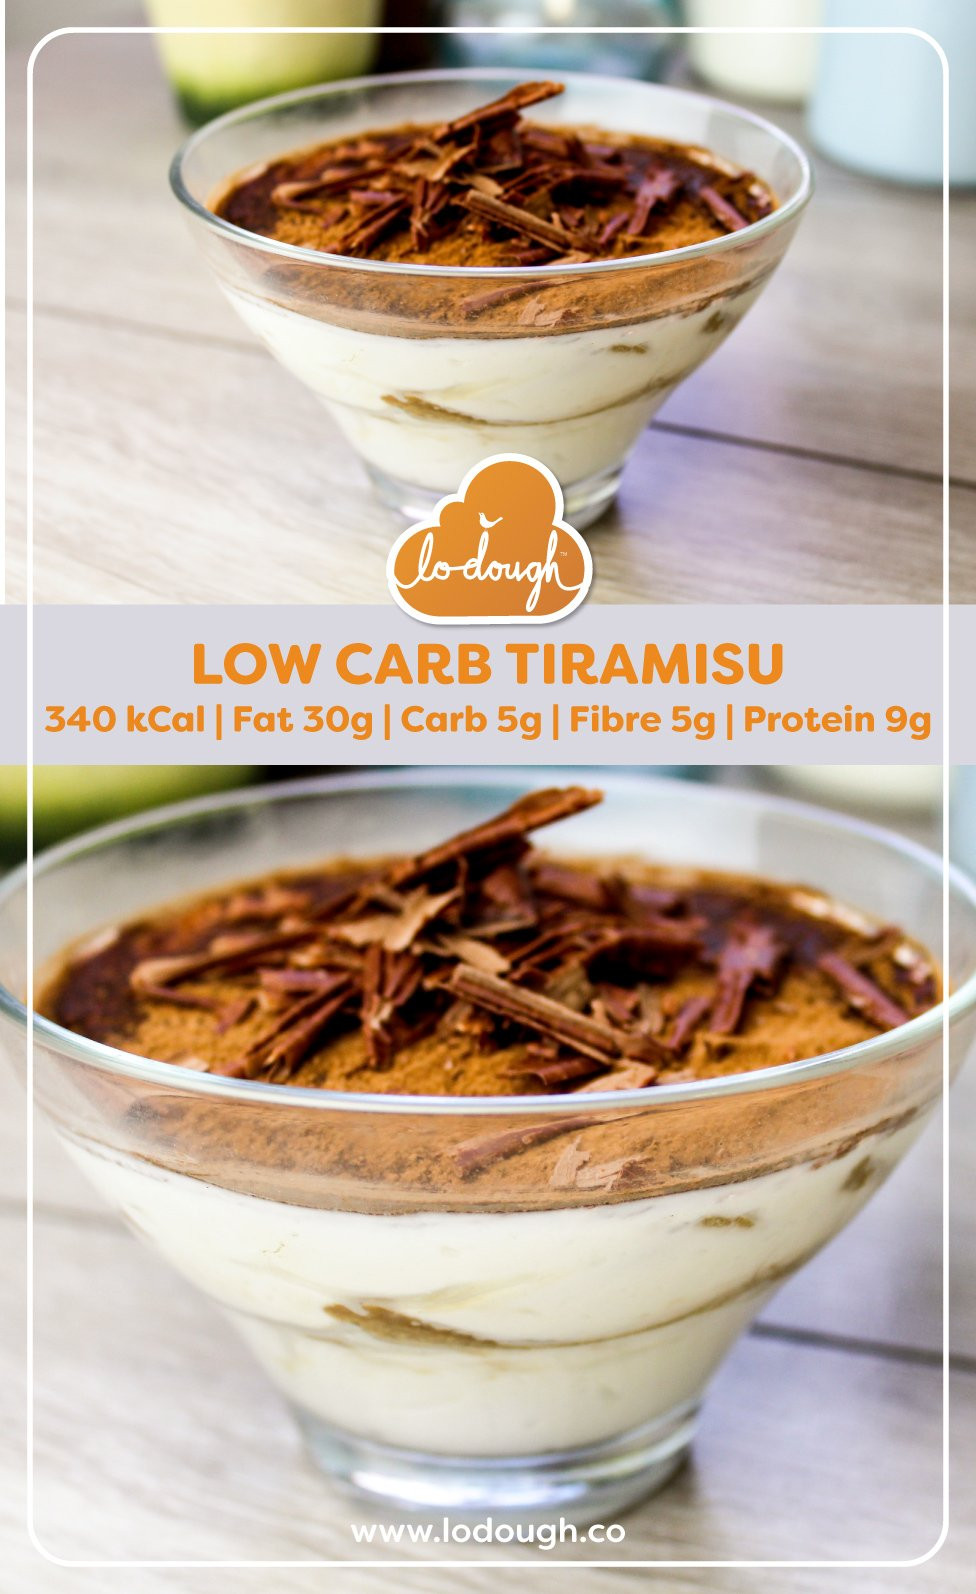 Low Calorie Low Carb Desserts
 Low Carb Tiramisu Low Calorie Dessert Recipes